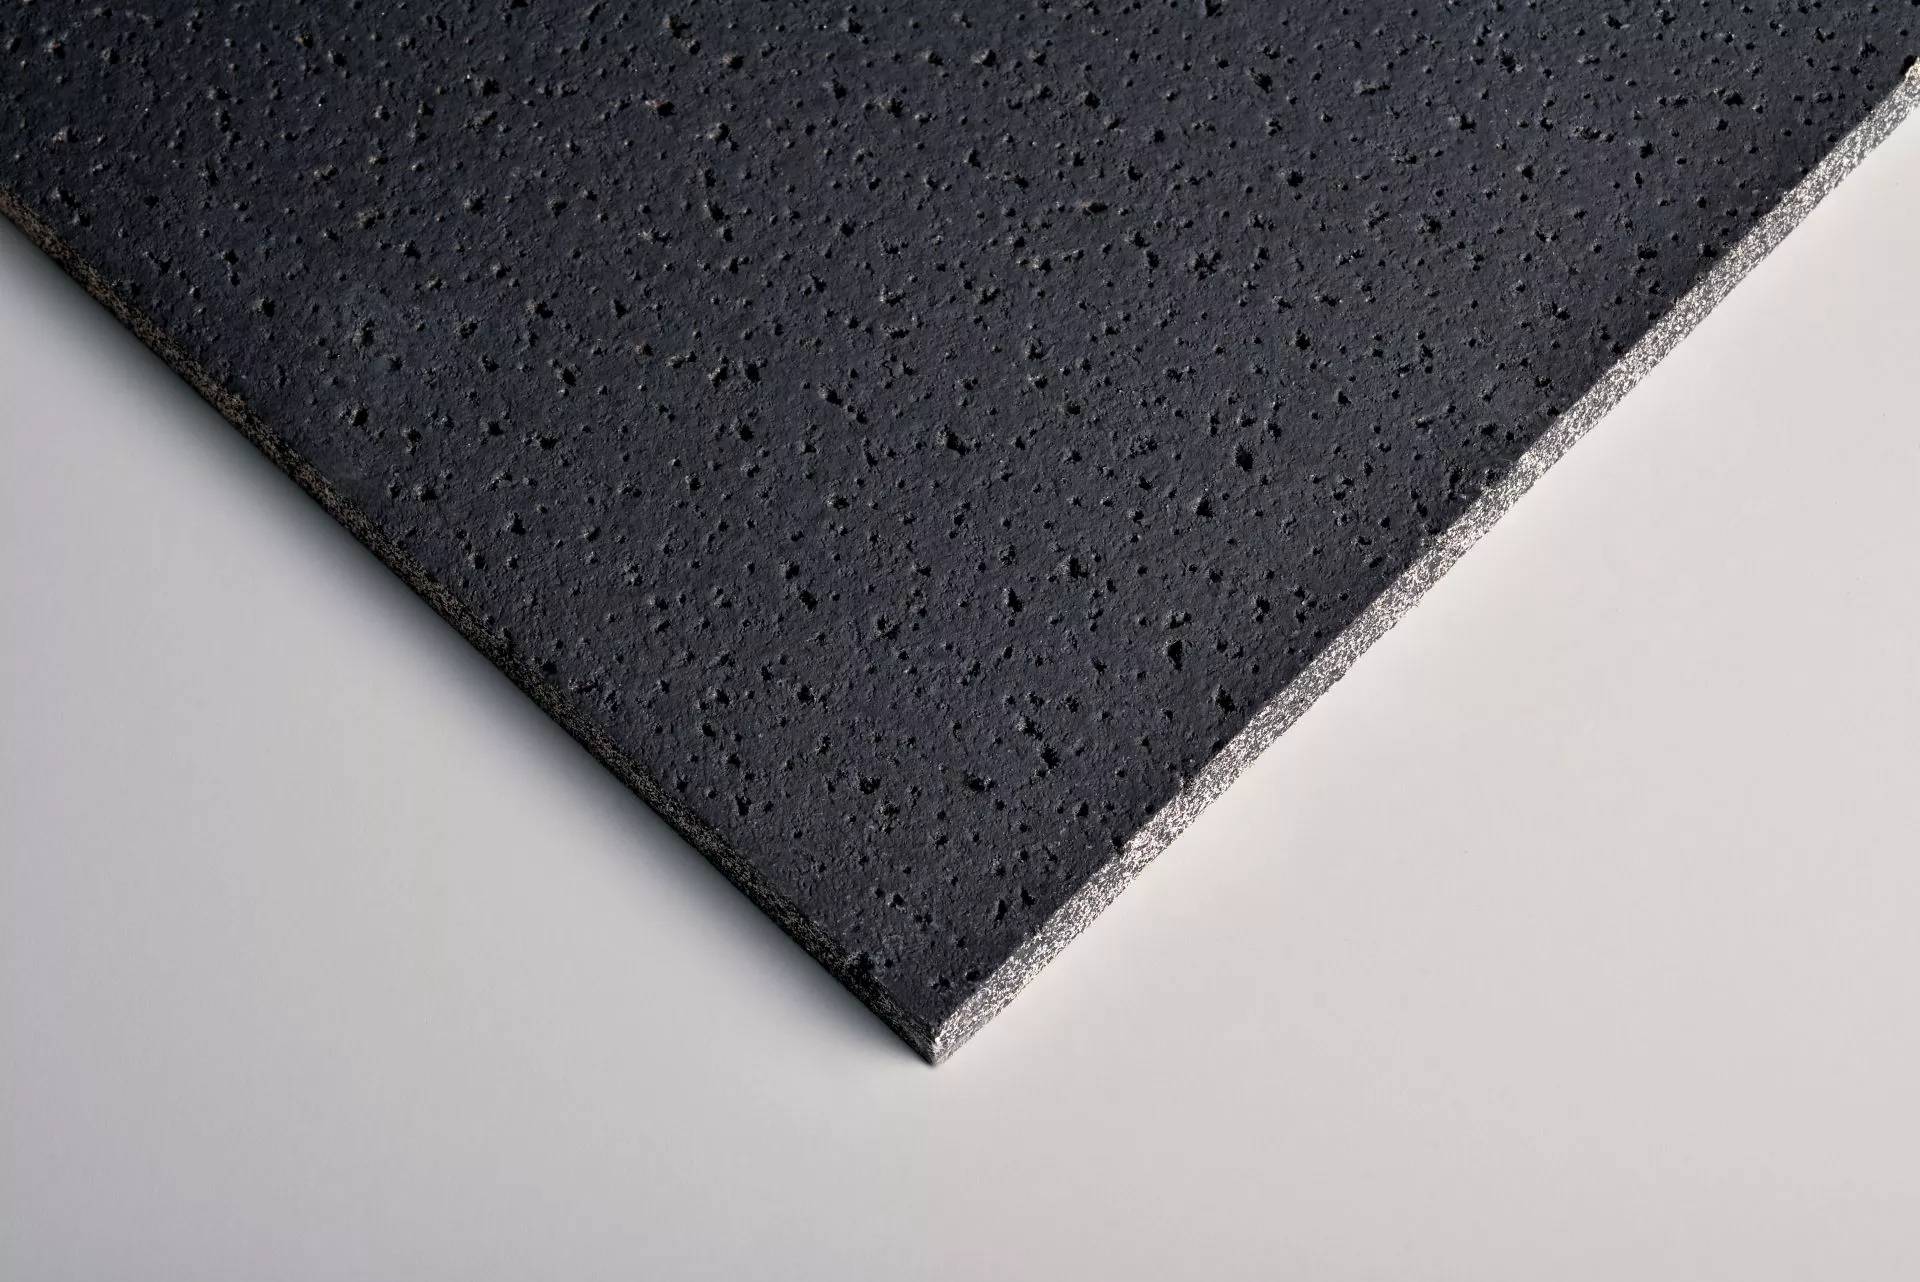 Fission FT Black - Mineral Tile Suspended Ceiling System